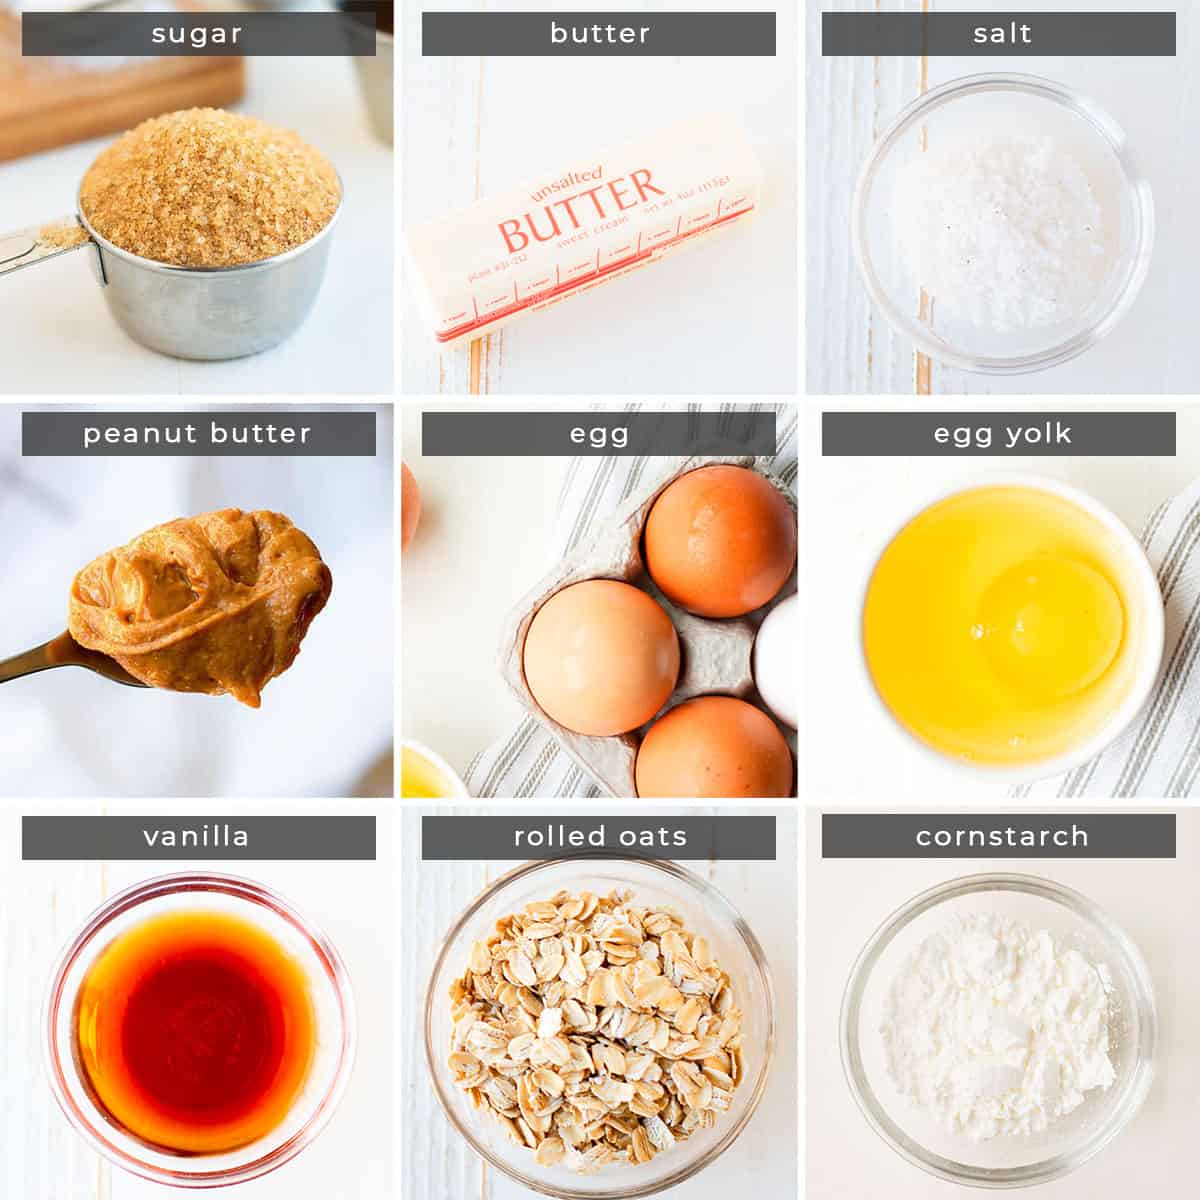 Image containing recipe ingredients sugar, butter, salt, peanut butter, egg, egg yolk, vanilla, rolled oats, cornstarch.